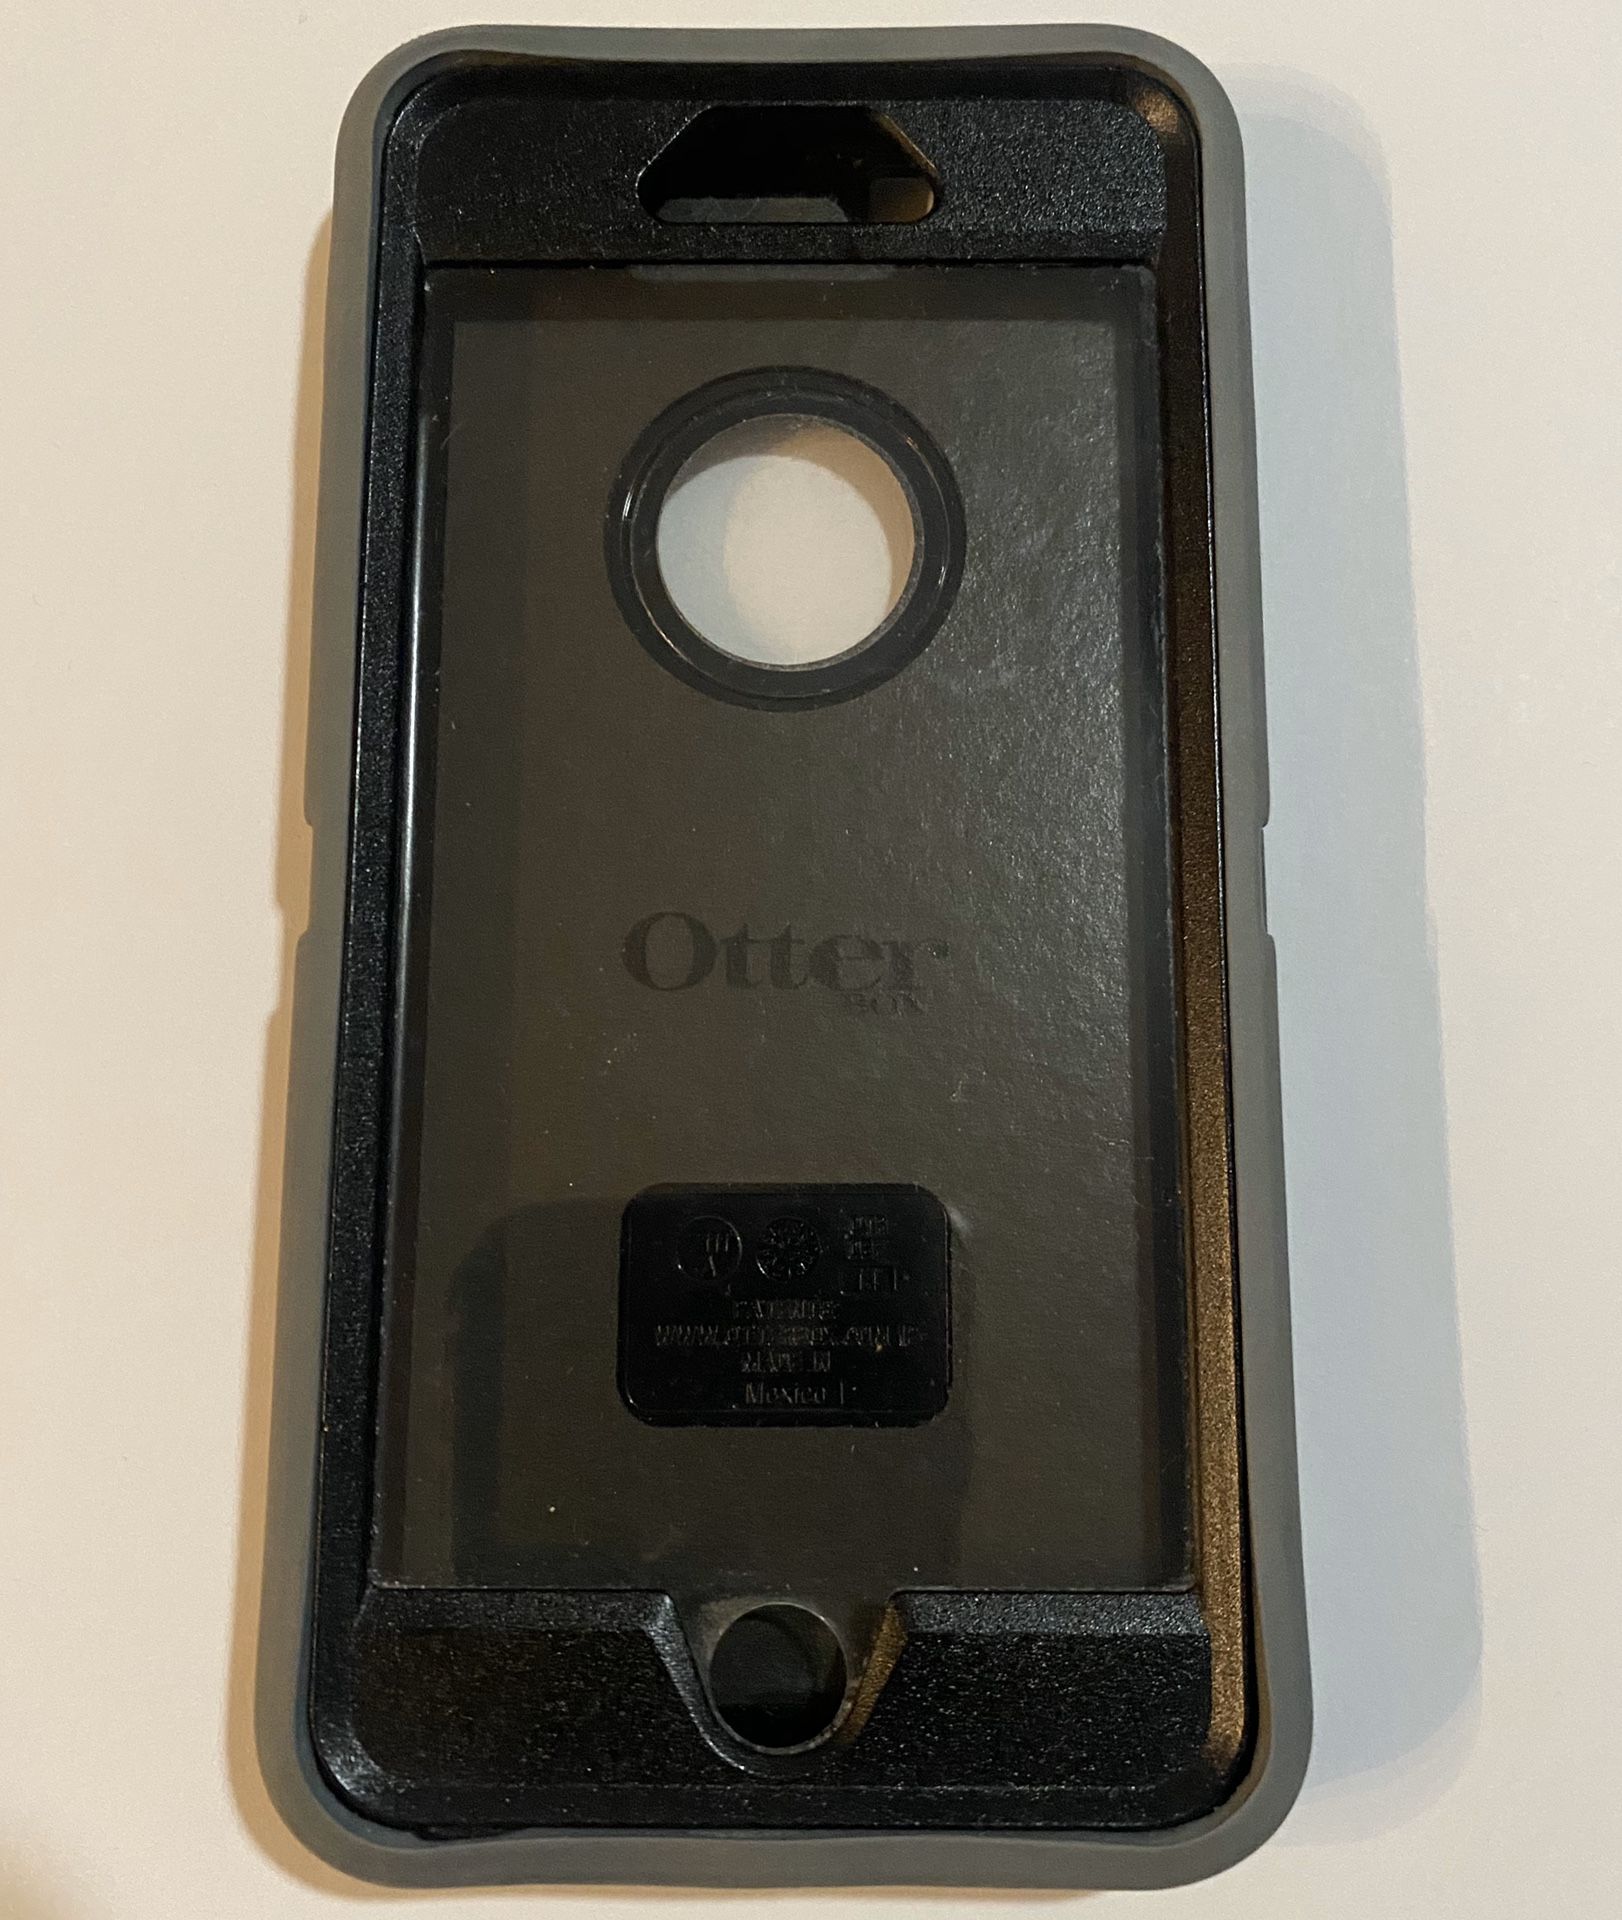 Otter box IPhone 6 Plus case